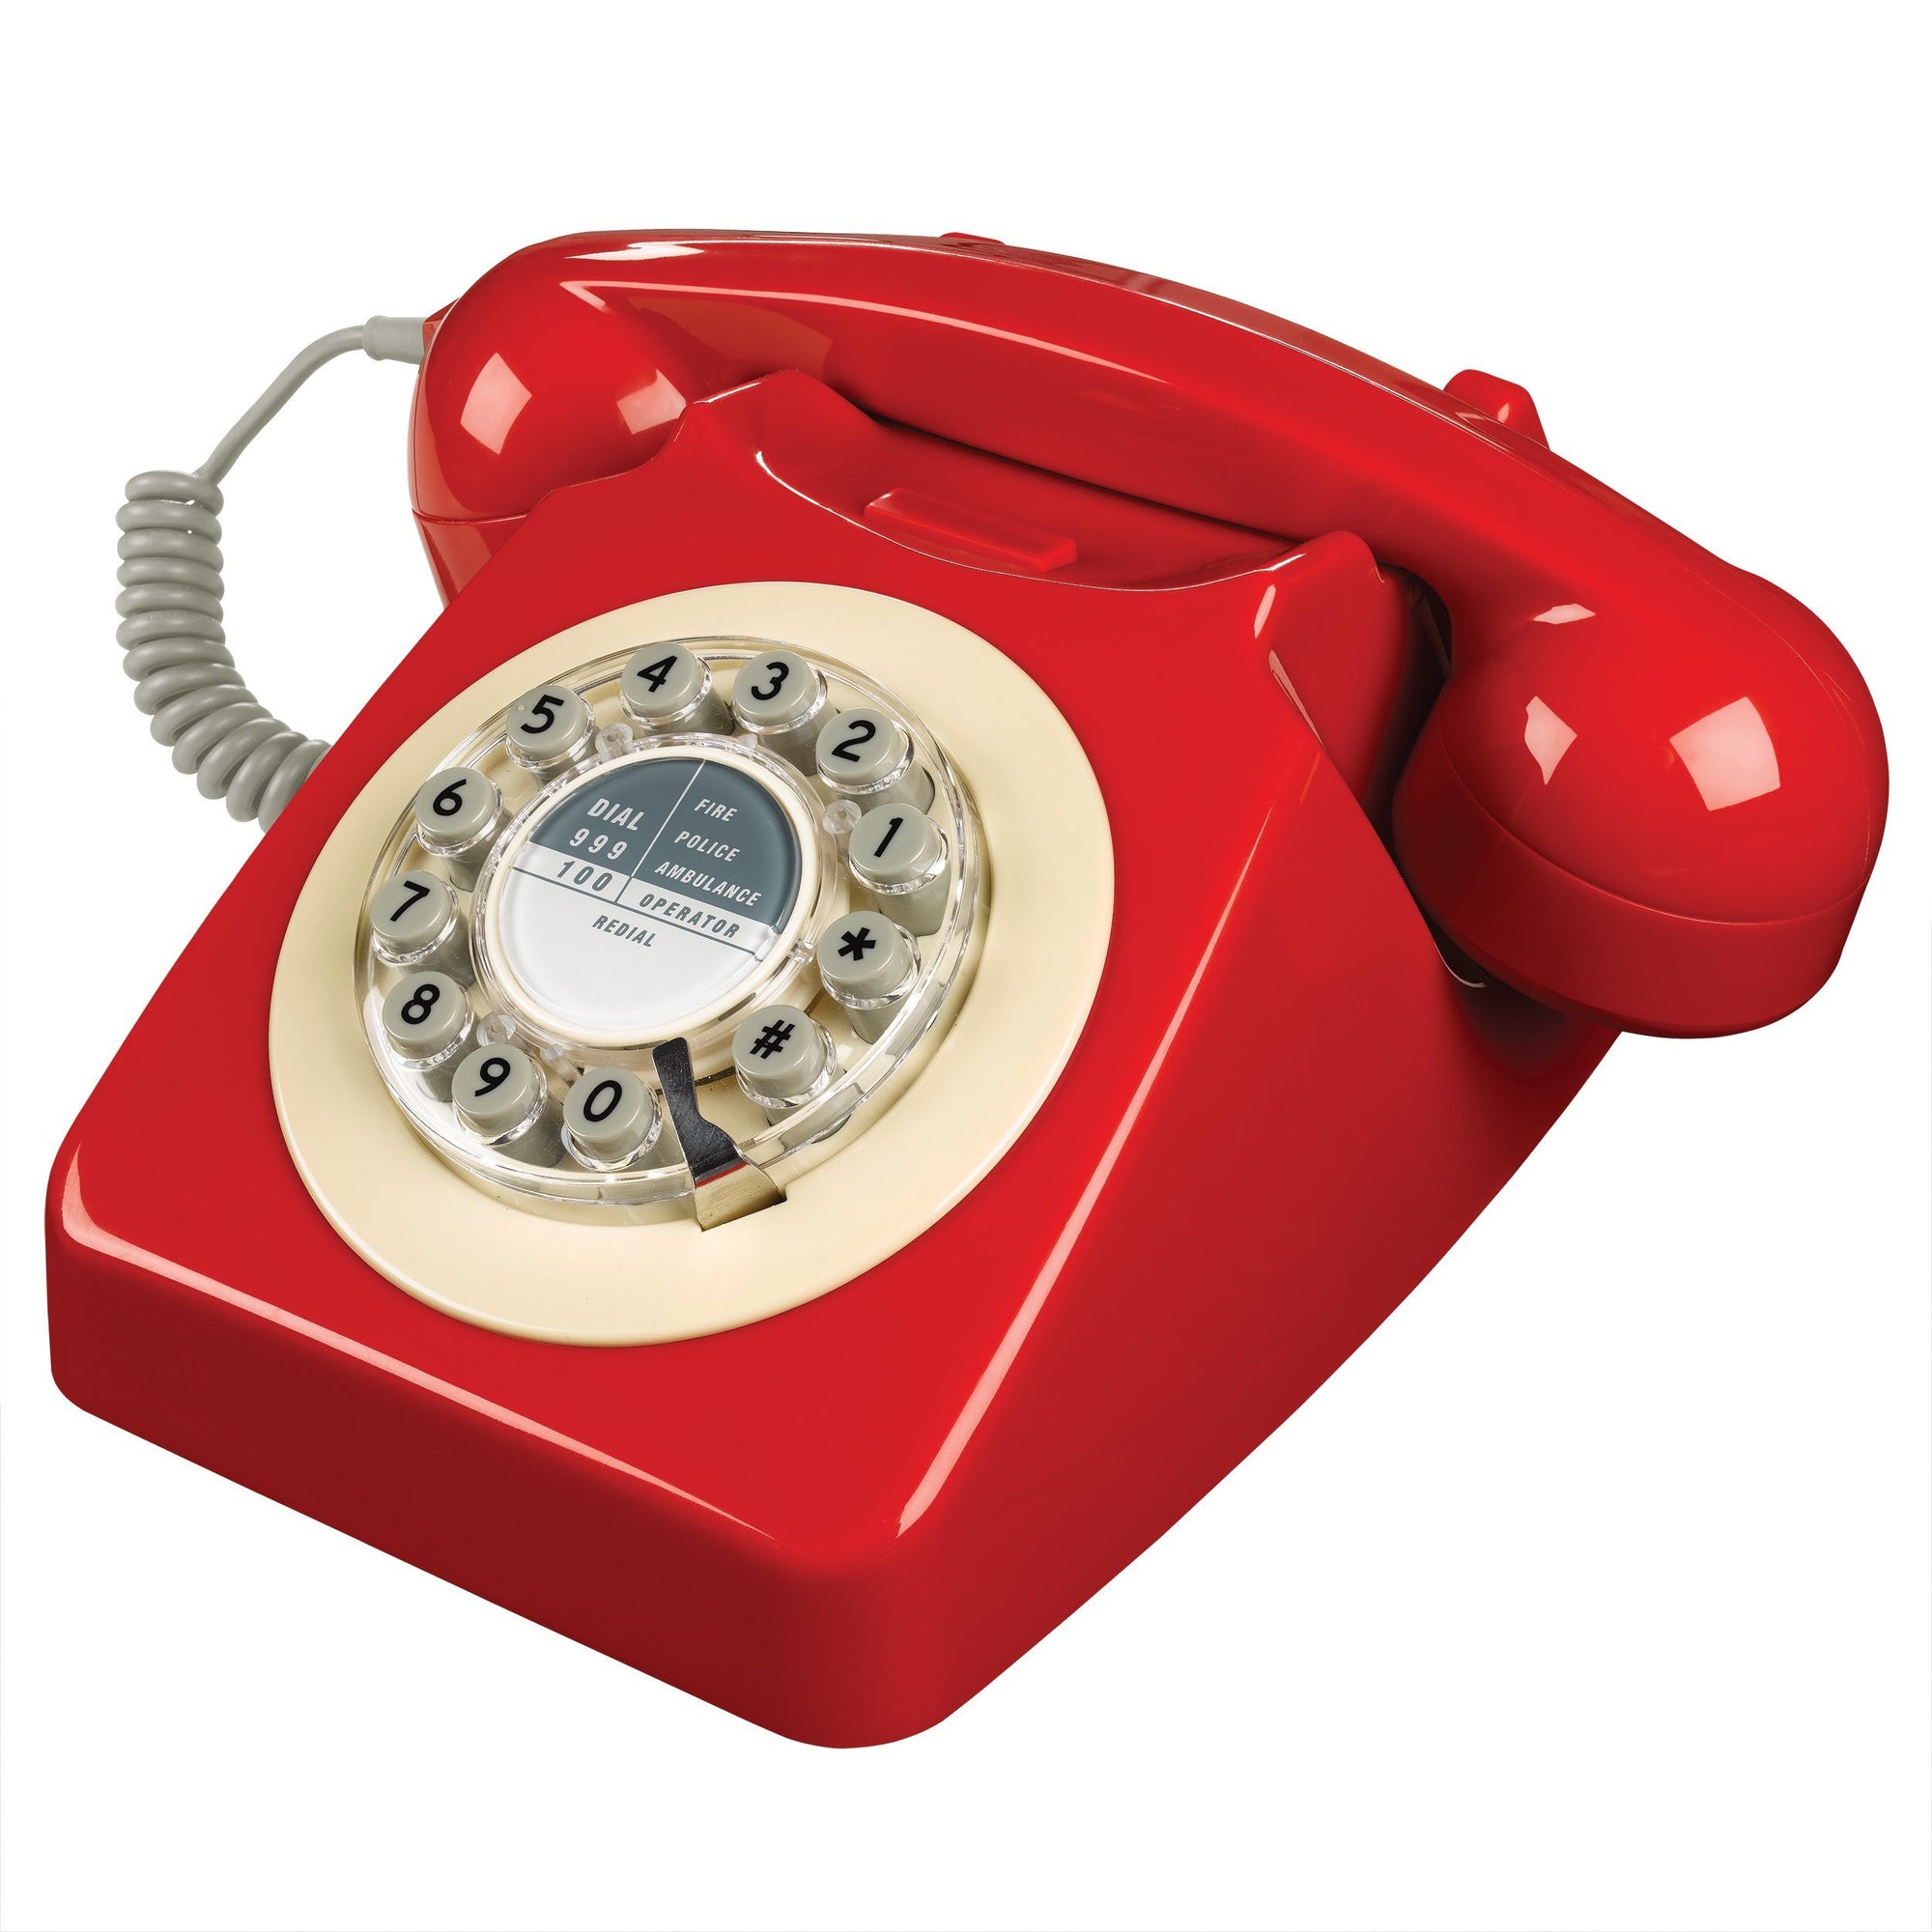 Red 746 Telephone Classic 1960's Design - BouChic 